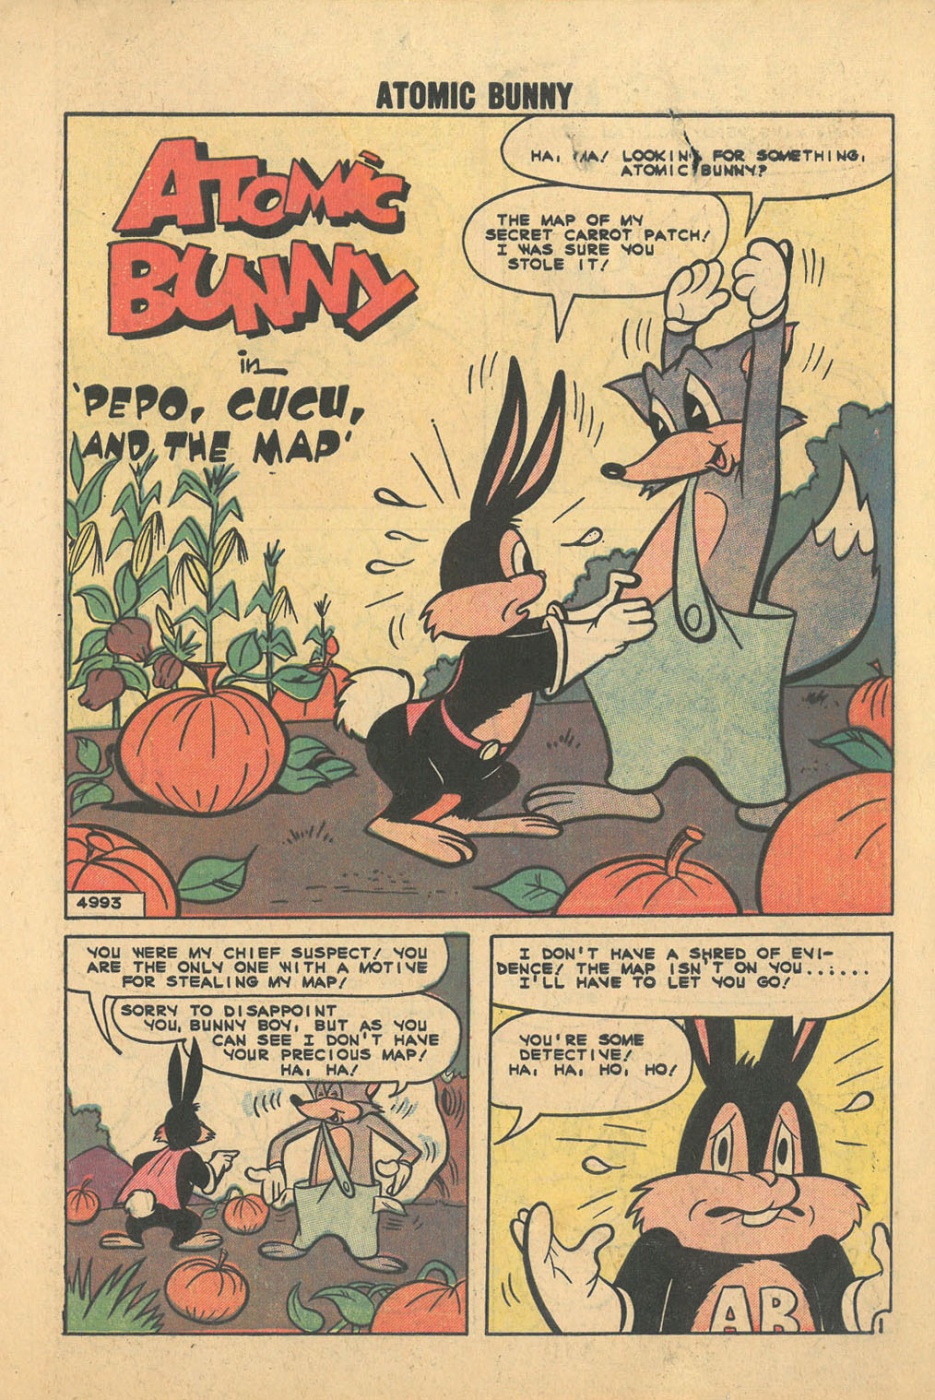 Atomic-Bunny-Comic-Strips (b) (3)